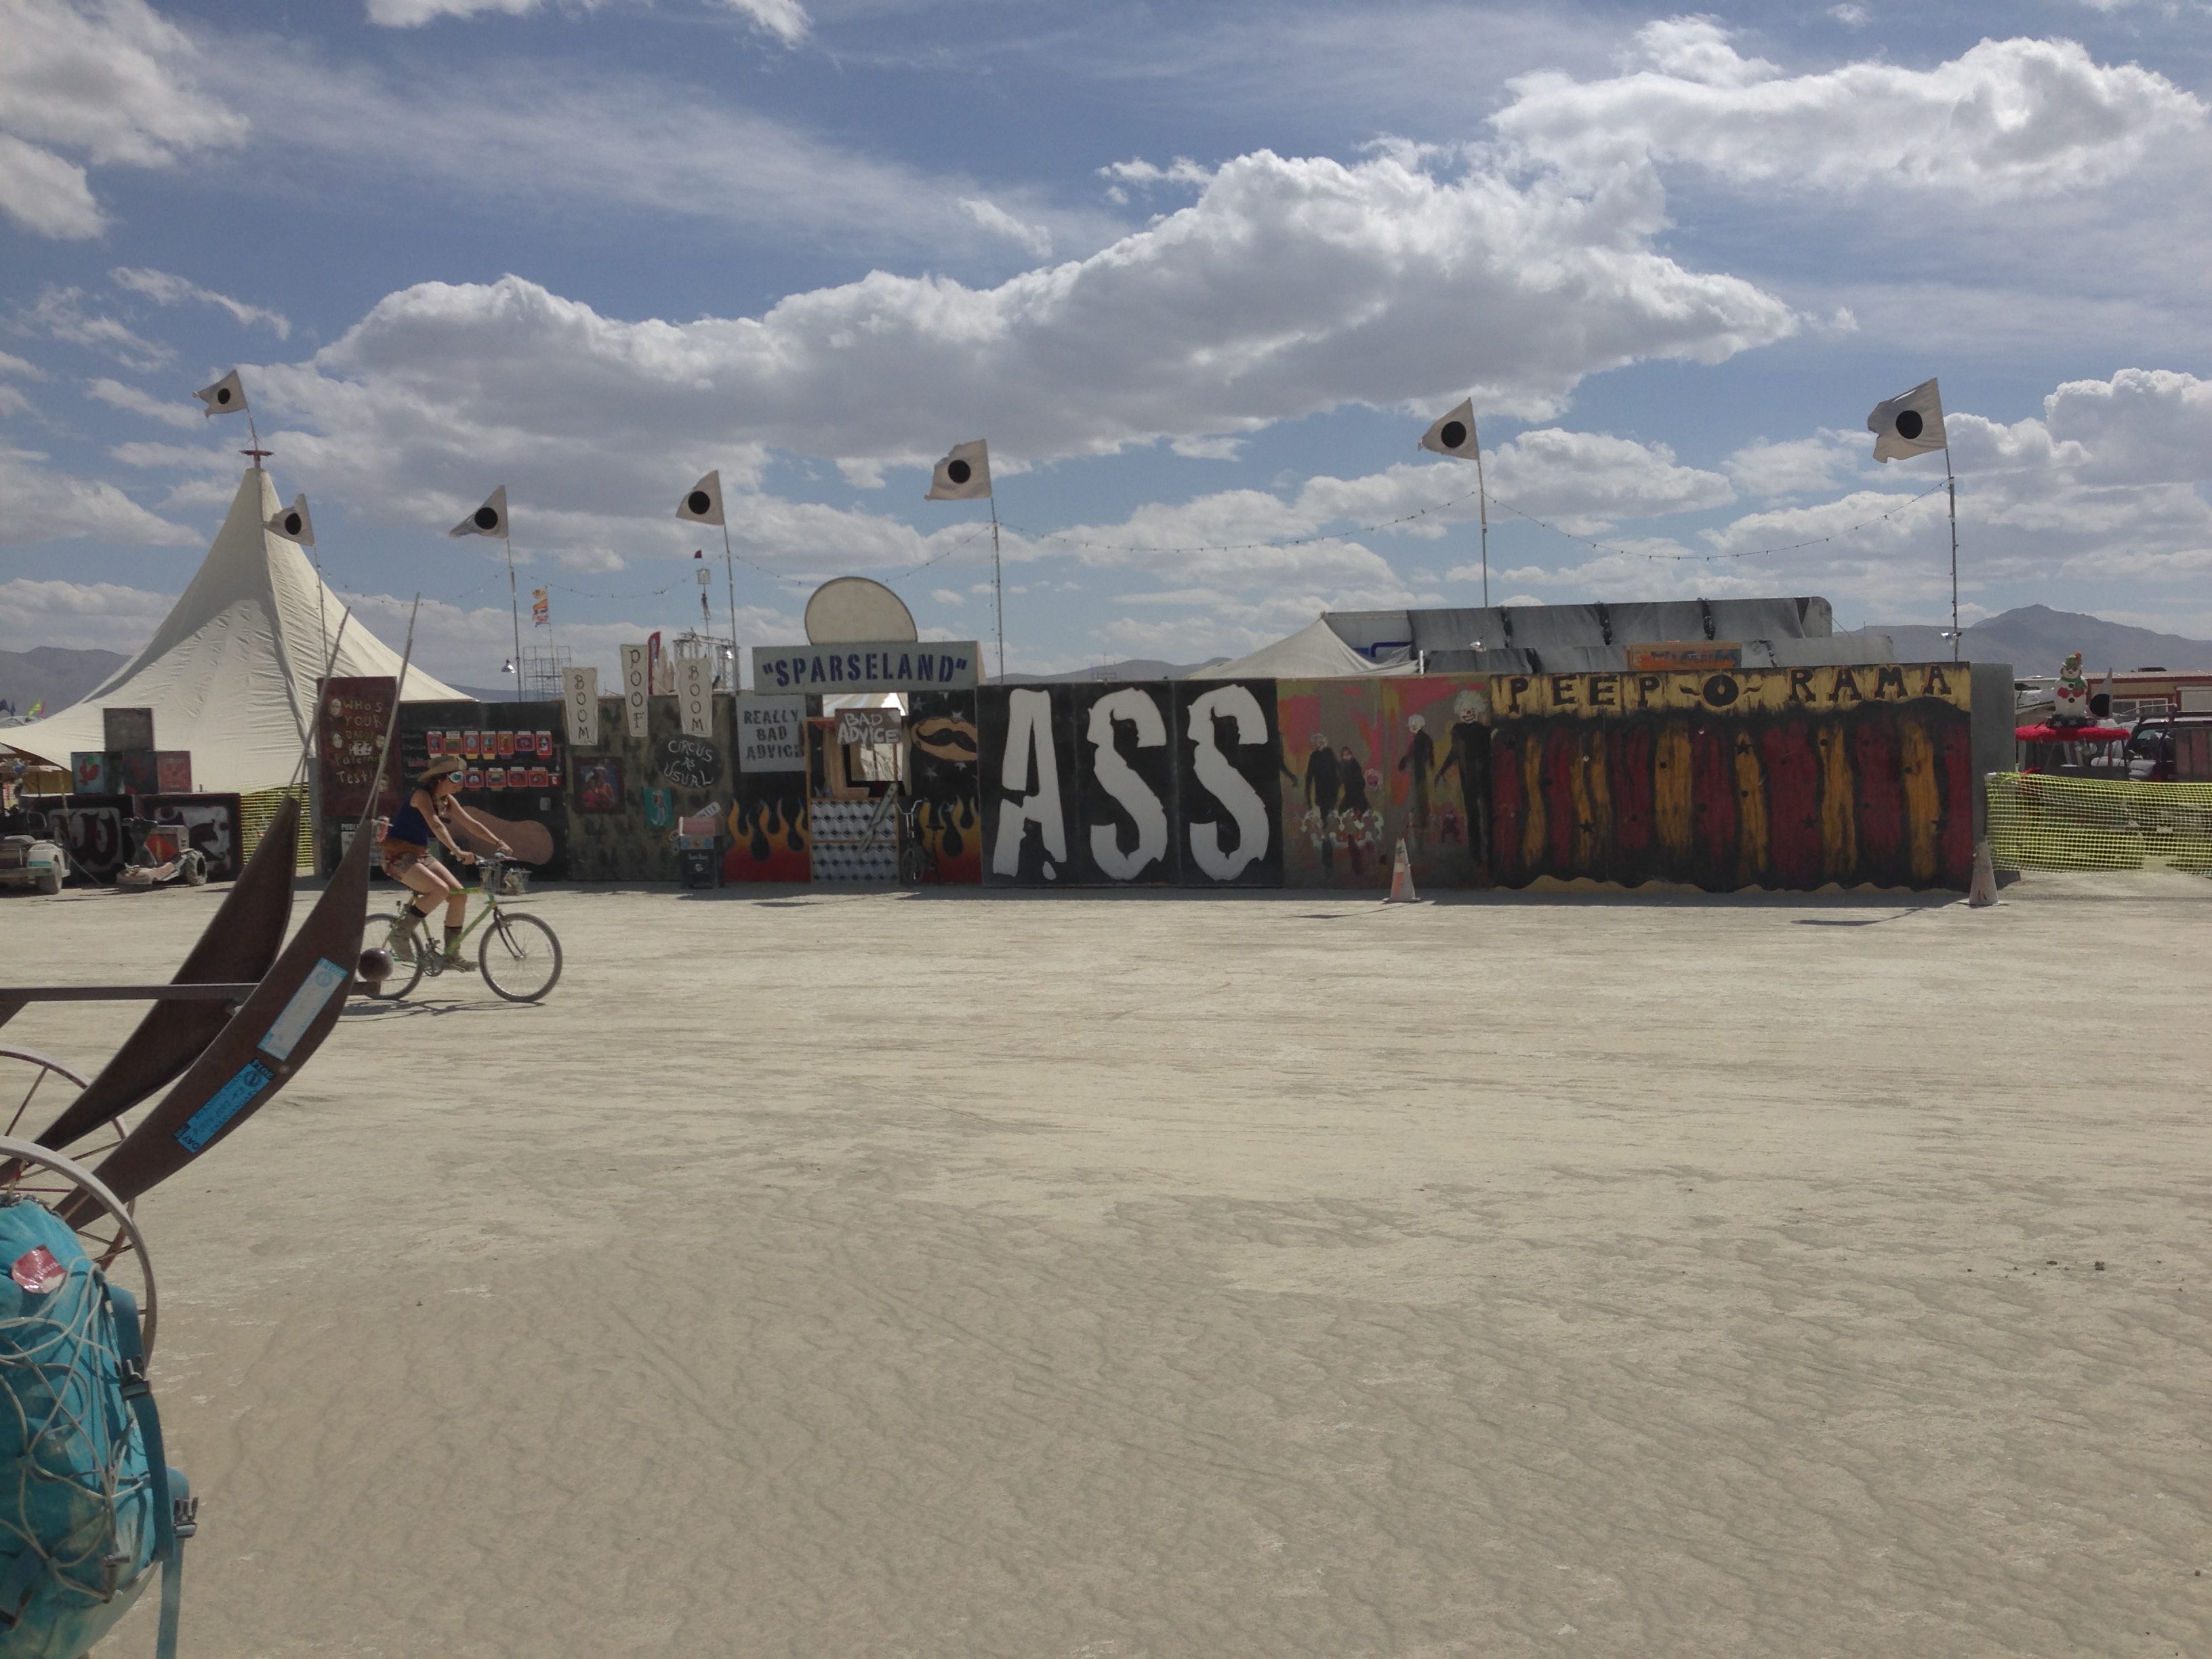 Stay clbutty, Burning Man.